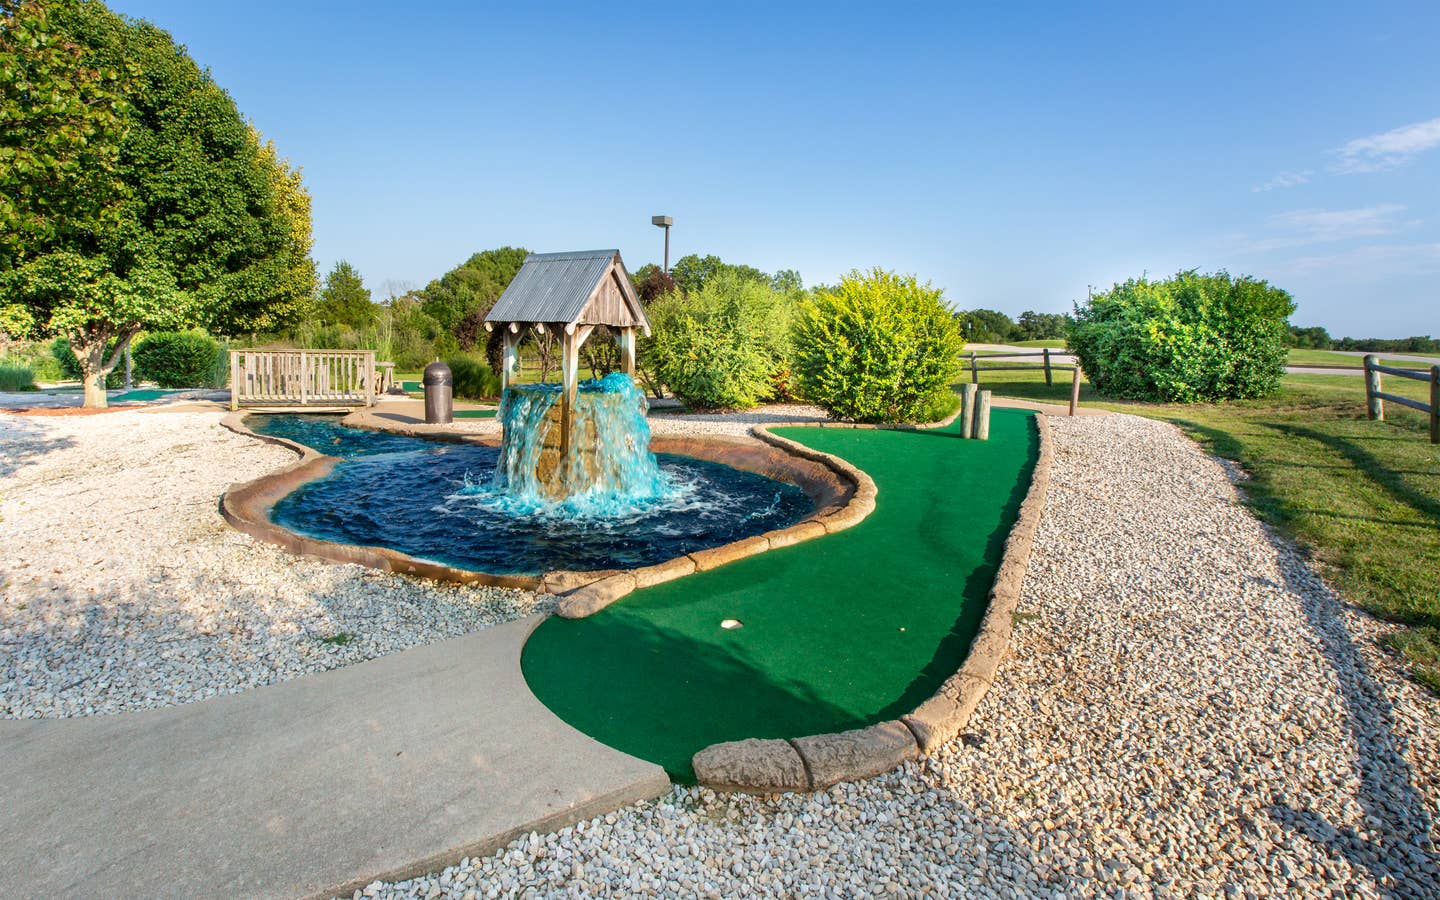 Outdoor mini golf course at Timber Creek Resort in De Soto, Missouri.